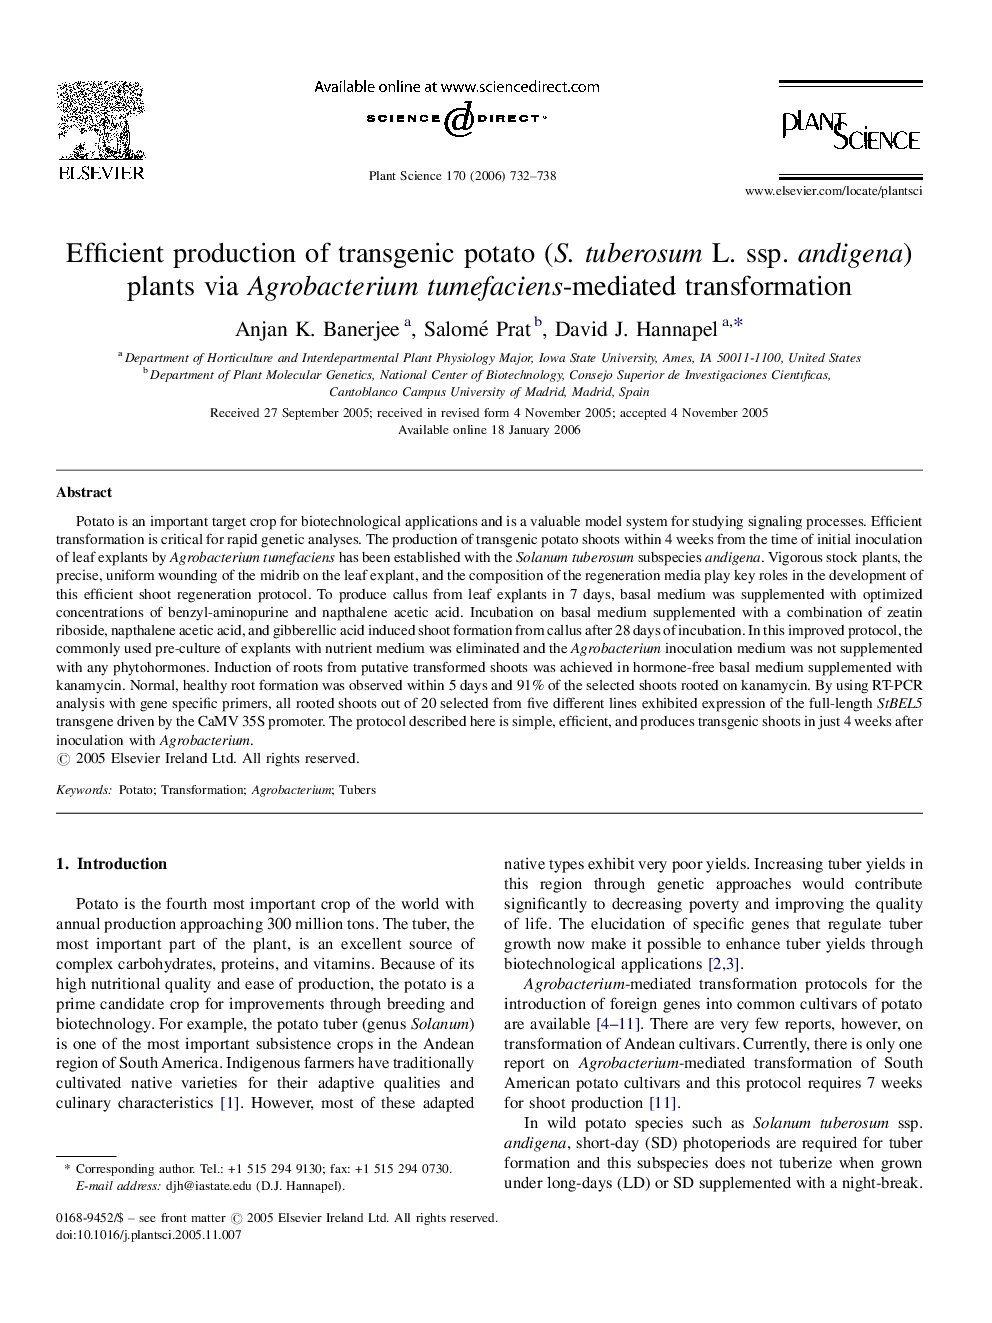 Efficient production of transgenic potato (S. tuberosum L. ssp. andigena) plants via Agrobacterium tumefaciens-mediated transformation